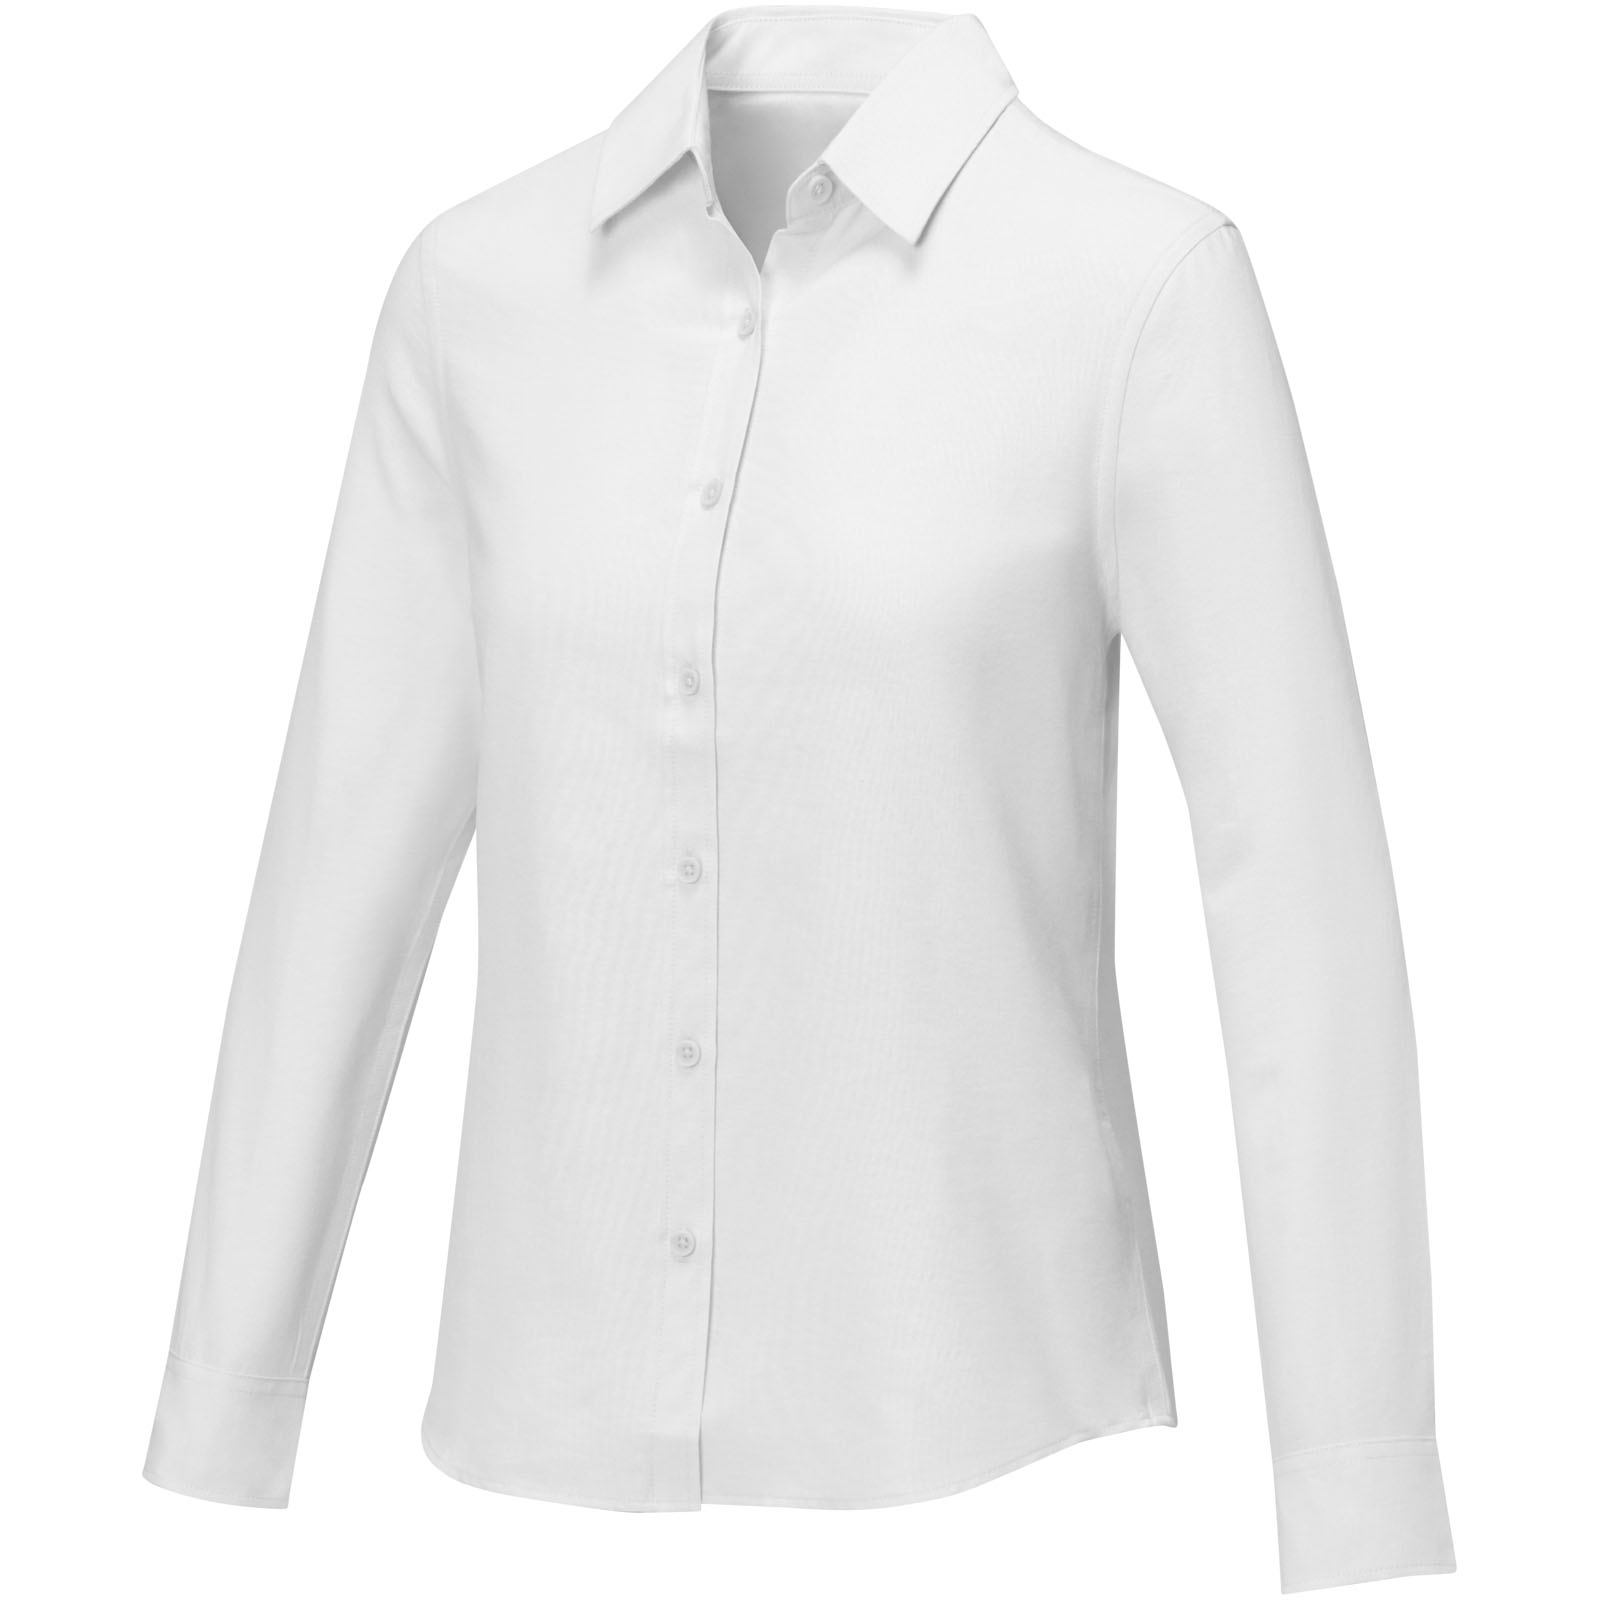 Clothing - Pollux long sleeve women's shirt